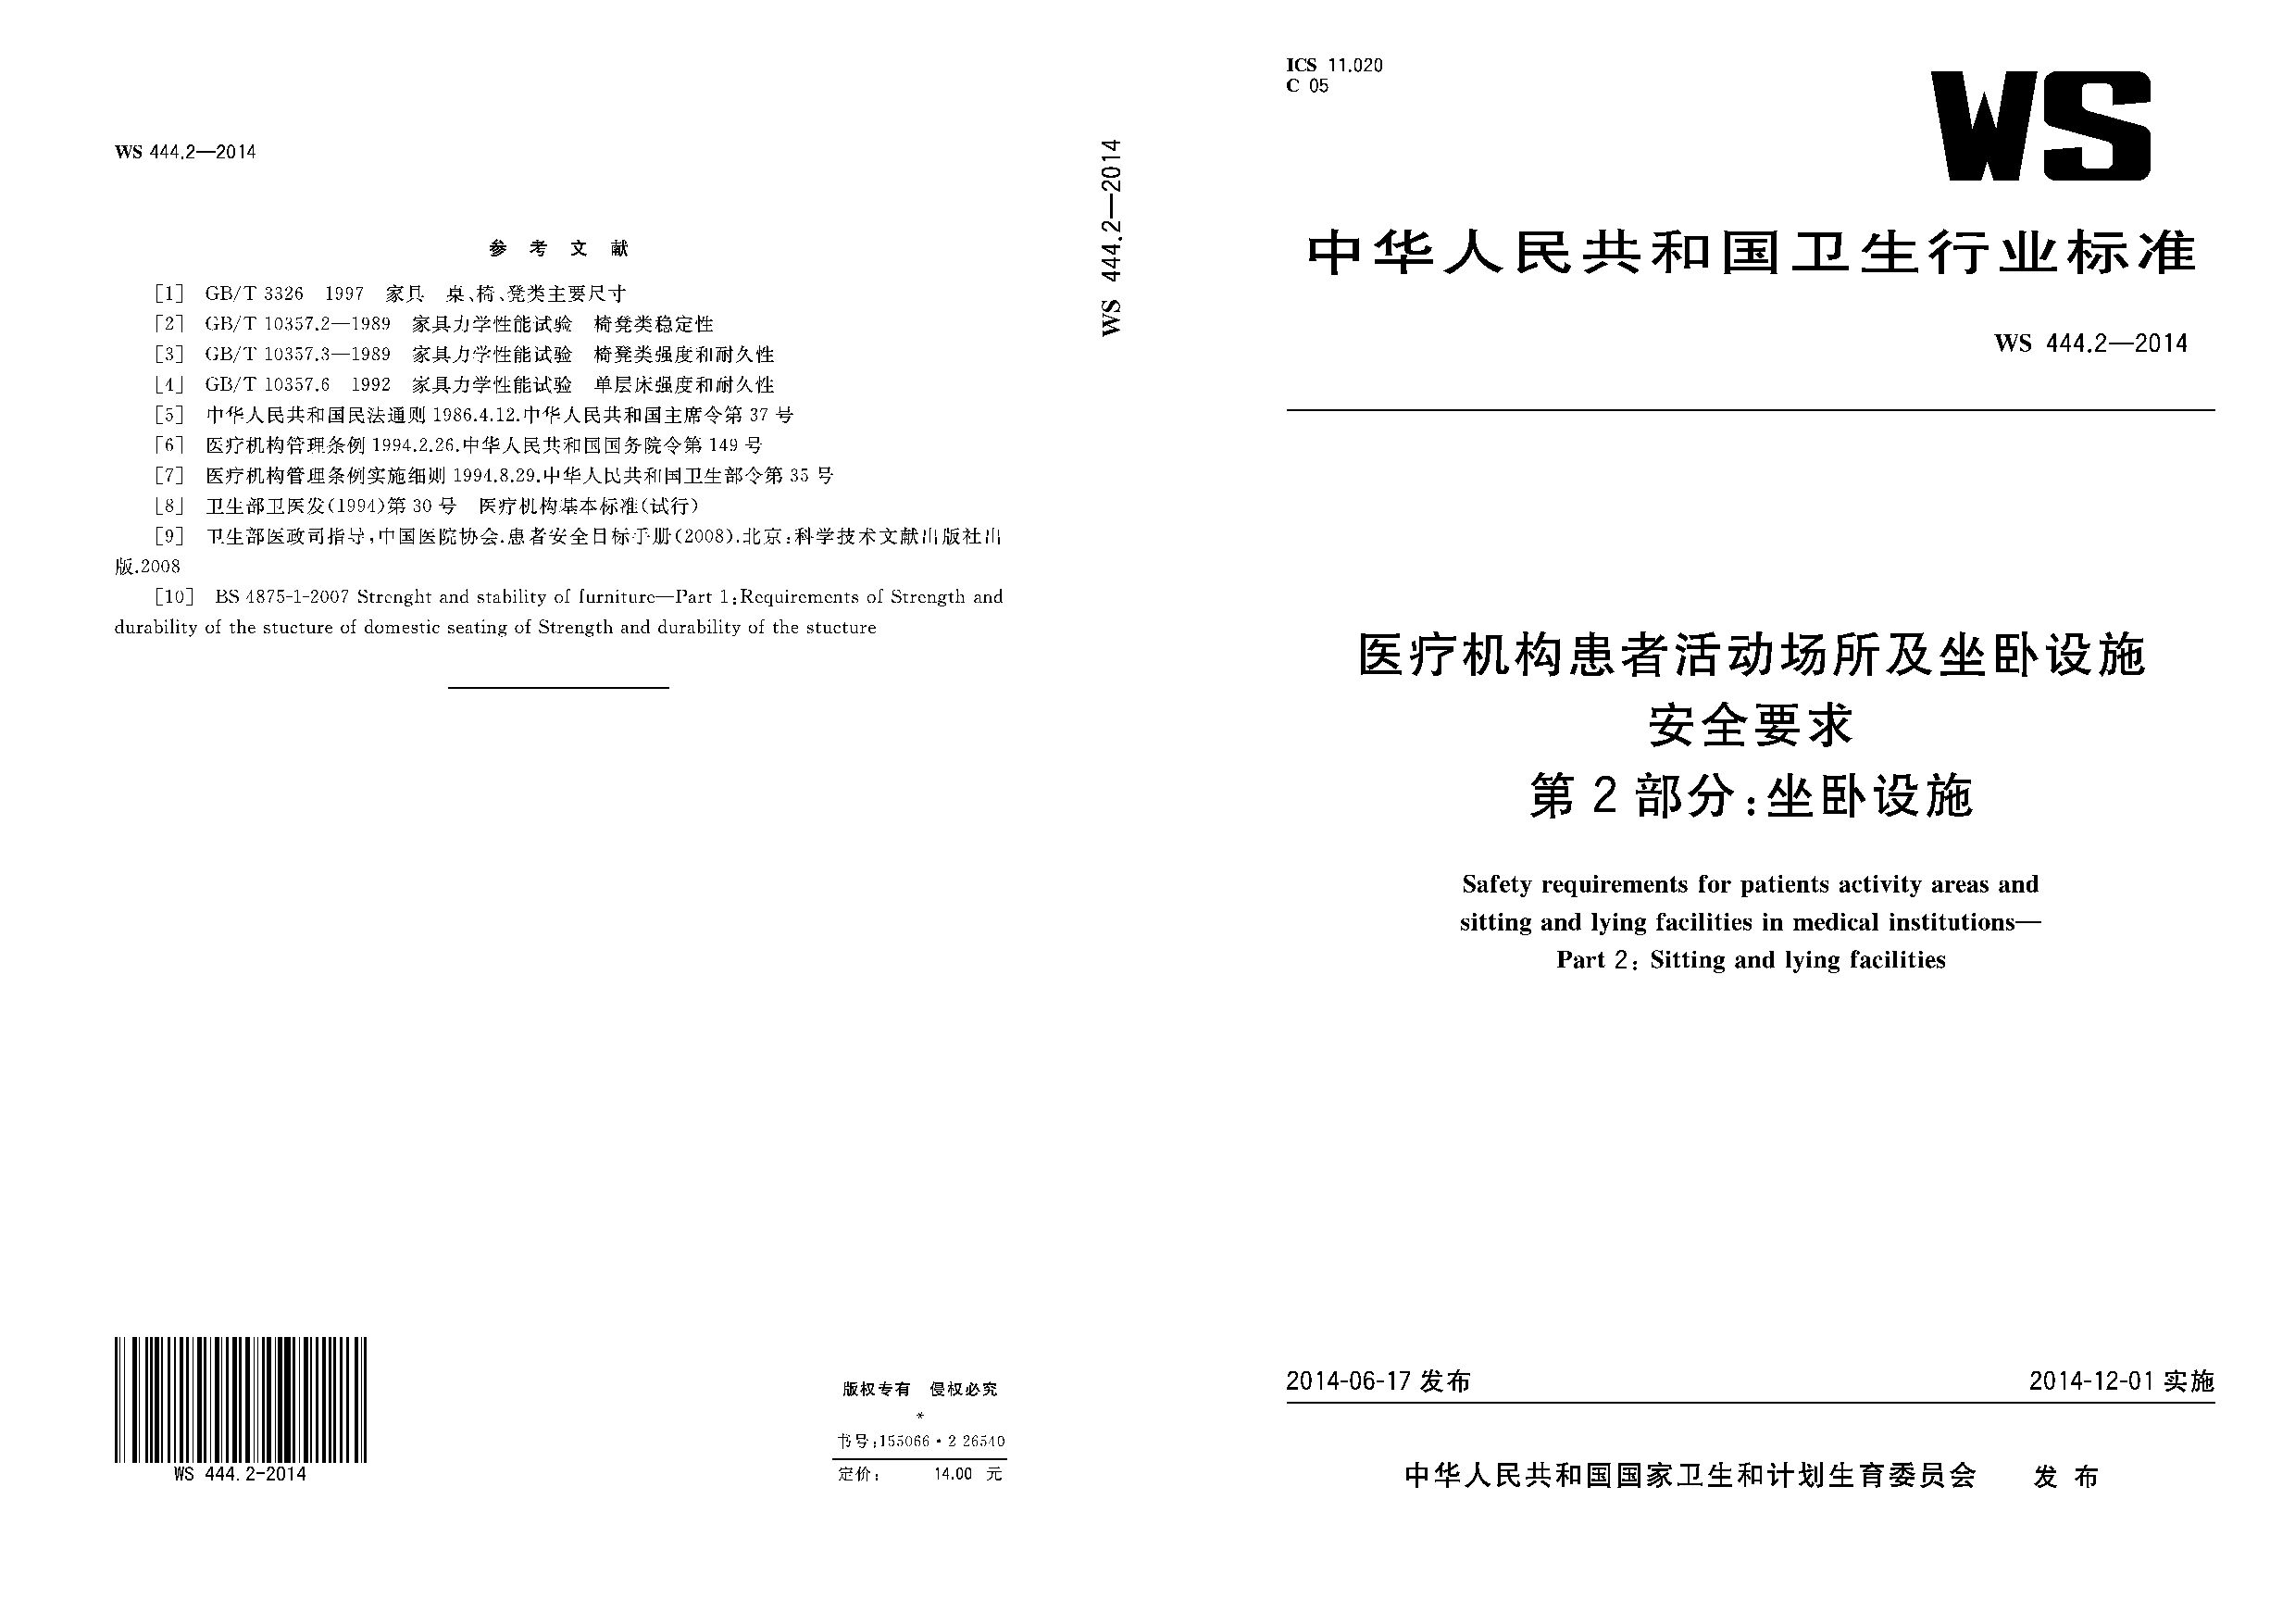 WS 444.2-2014封面图